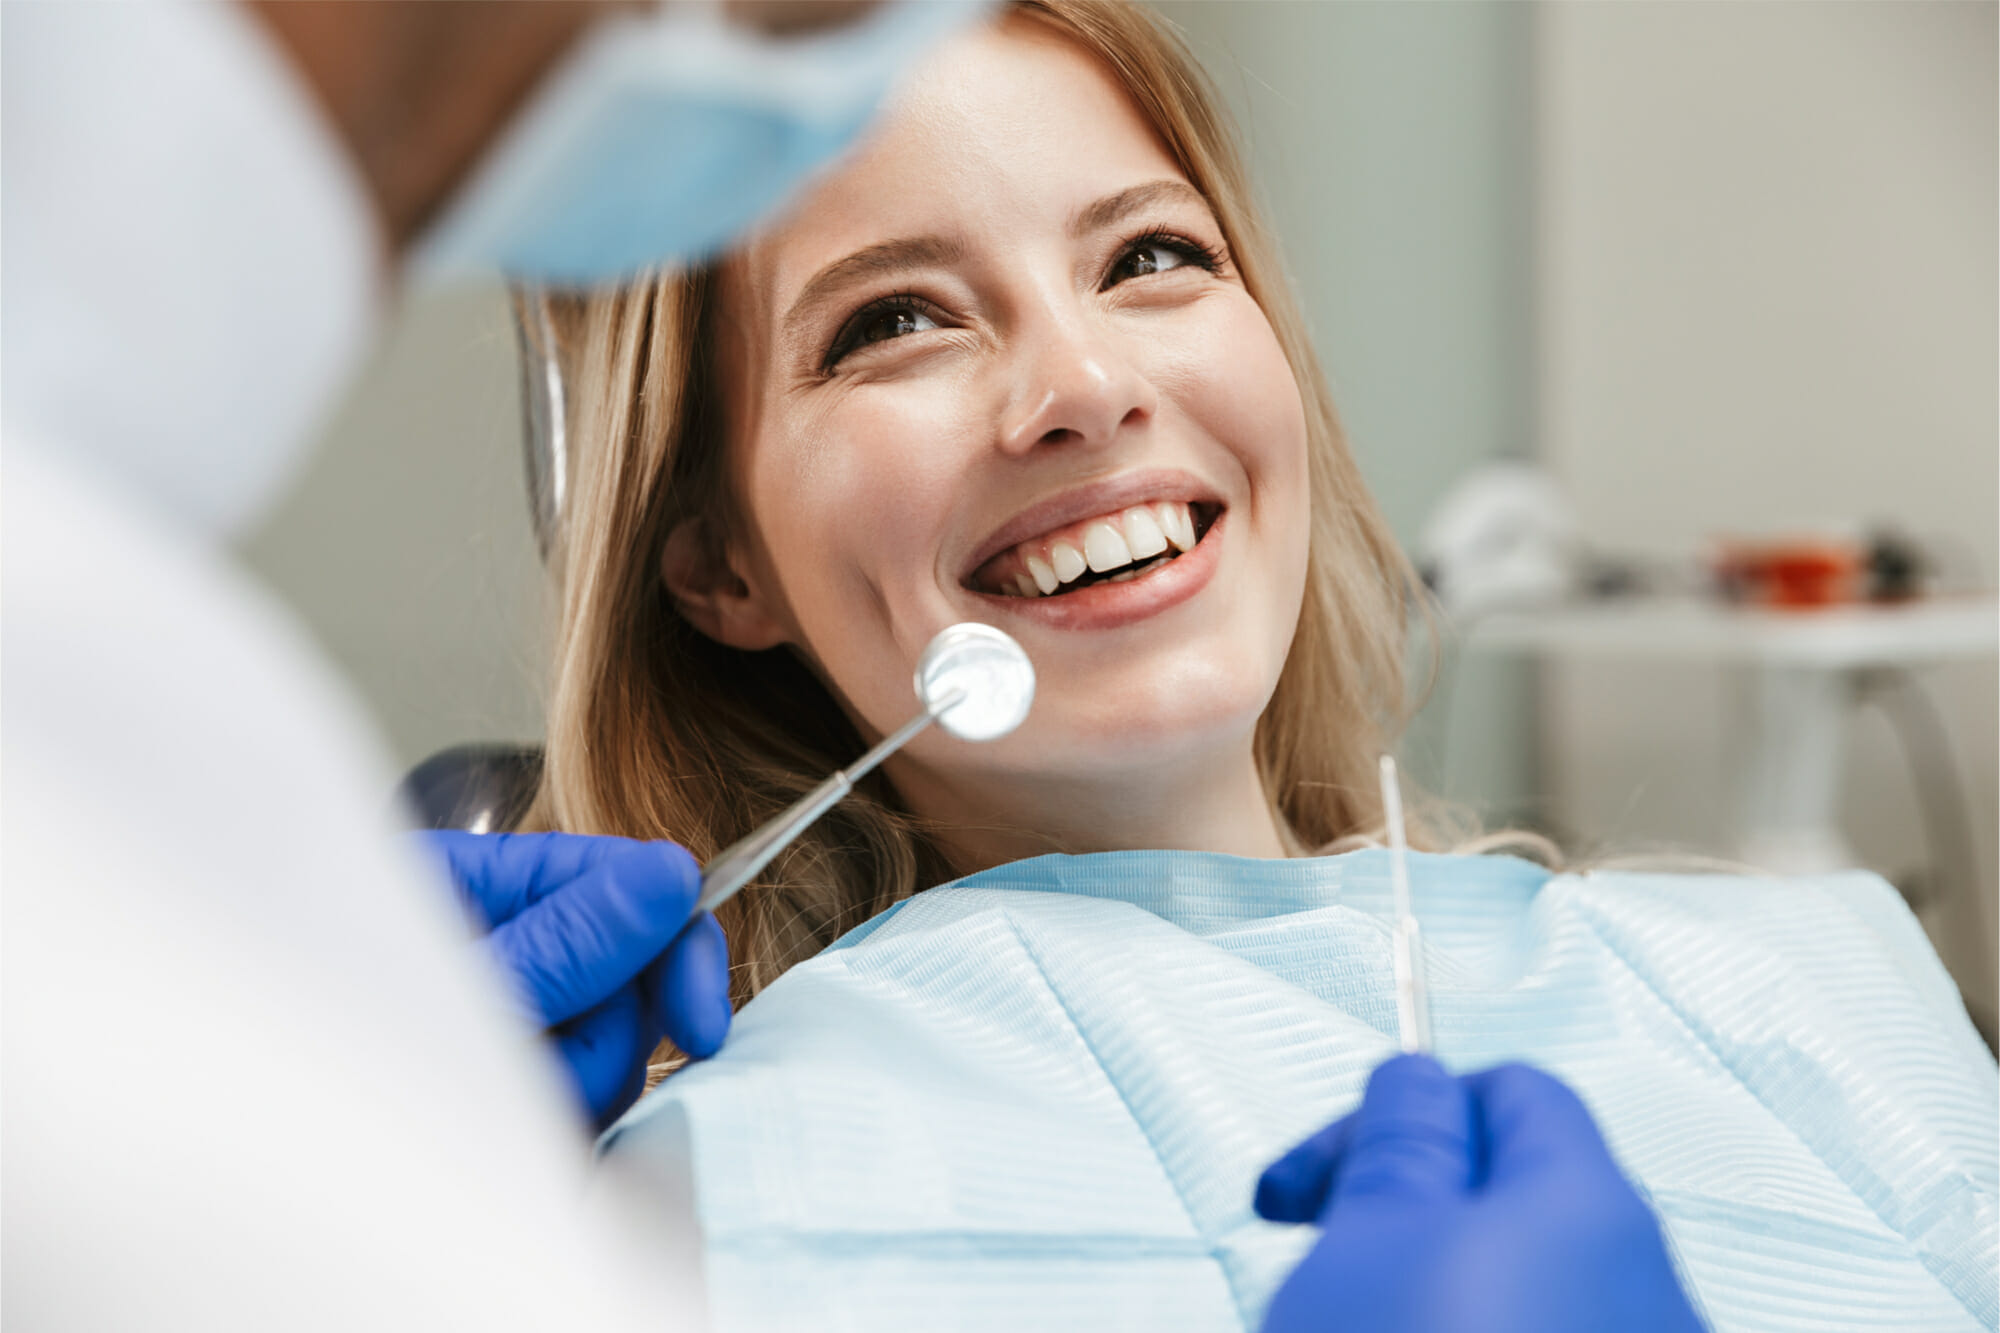 woman smiling at dentist